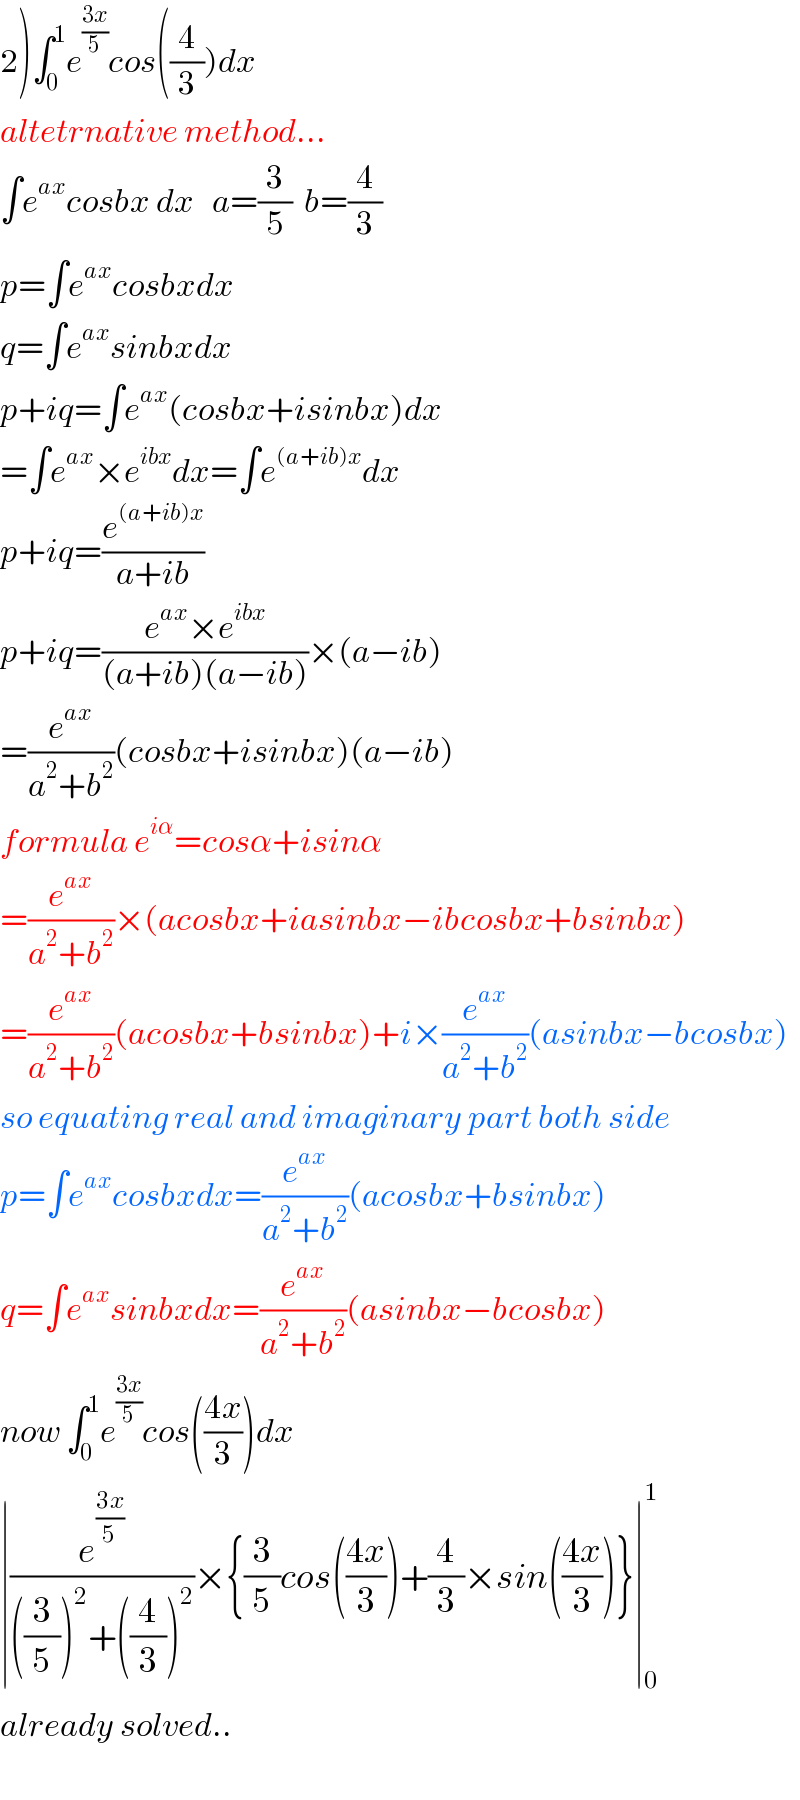 2)∫_0 ^1 e^((3x)/5) cos((4/3))dx  altetrnative method...  ∫e^(ax) cosbx dx   a=(3/5)  b=(4/3)  p=∫e^(ax) cosbxdx  q=∫e^(ax) sinbxdx  p+iq=∫e^(ax) (cosbx+isinbx)dx  =∫e^(ax) ×e^(ibx) dx=∫e^((a+ib)x) dx  p+iq=(e^((a+ib)x) /(a+ib))  p+iq=((e^(ax) ×e^(ibx) )/((a+ib)(a−ib)))×(a−ib)  =(e^(ax) /(a^2 +b^2 ))(cosbx+isinbx)(a−ib)  formula e^(iα) =cosα+isinα  =(e^(ax) /(a^2 +b^2 ))×(acosbx+iasinbx−ibcosbx+bsinbx)  =(e^(ax) /(a^2 +b^2 ))(acosbx+bsinbx)+i×(e^(ax) /(a^2 +b^2 ))(asinbx−bcosbx)  so equating real and imaginary part both side  p=∫e^(ax) cosbxdx=(e^(ax) /(a^2 +b^2 ))(acosbx+bsinbx)  q=∫e^(ax) sinbxdx=(e^(ax) /(a^2 +b^2 ))(asinbx−bcosbx)  now ∫_0 ^1 e^((3x)/5) cos(((4x)/3))dx  ∣(e^((3x)/5) /(((3/5))^2 +((4/3))^2 ))×{(3/5)cos(((4x)/3))+(4/3)×sin(((4x)/3))}∣_0 ^1   already solved..    